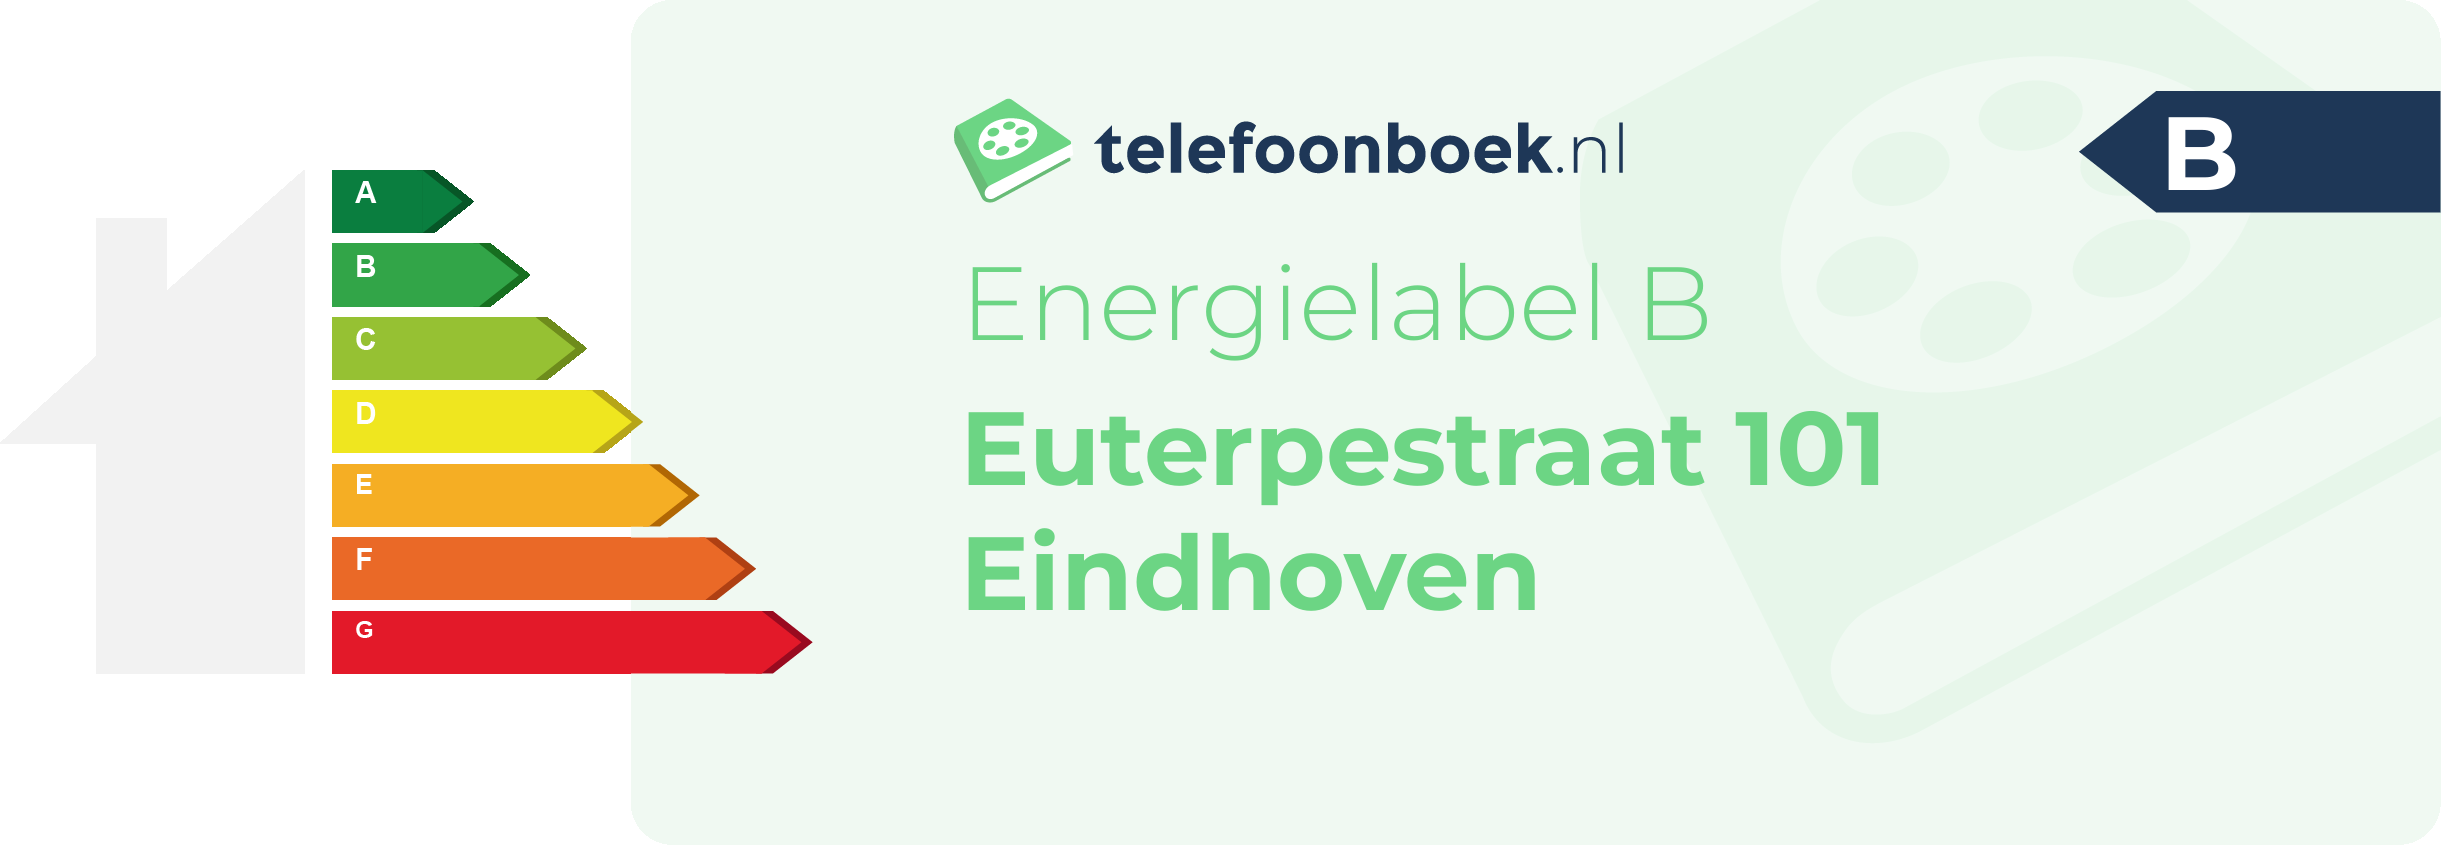 Energielabel Euterpestraat 101 Eindhoven